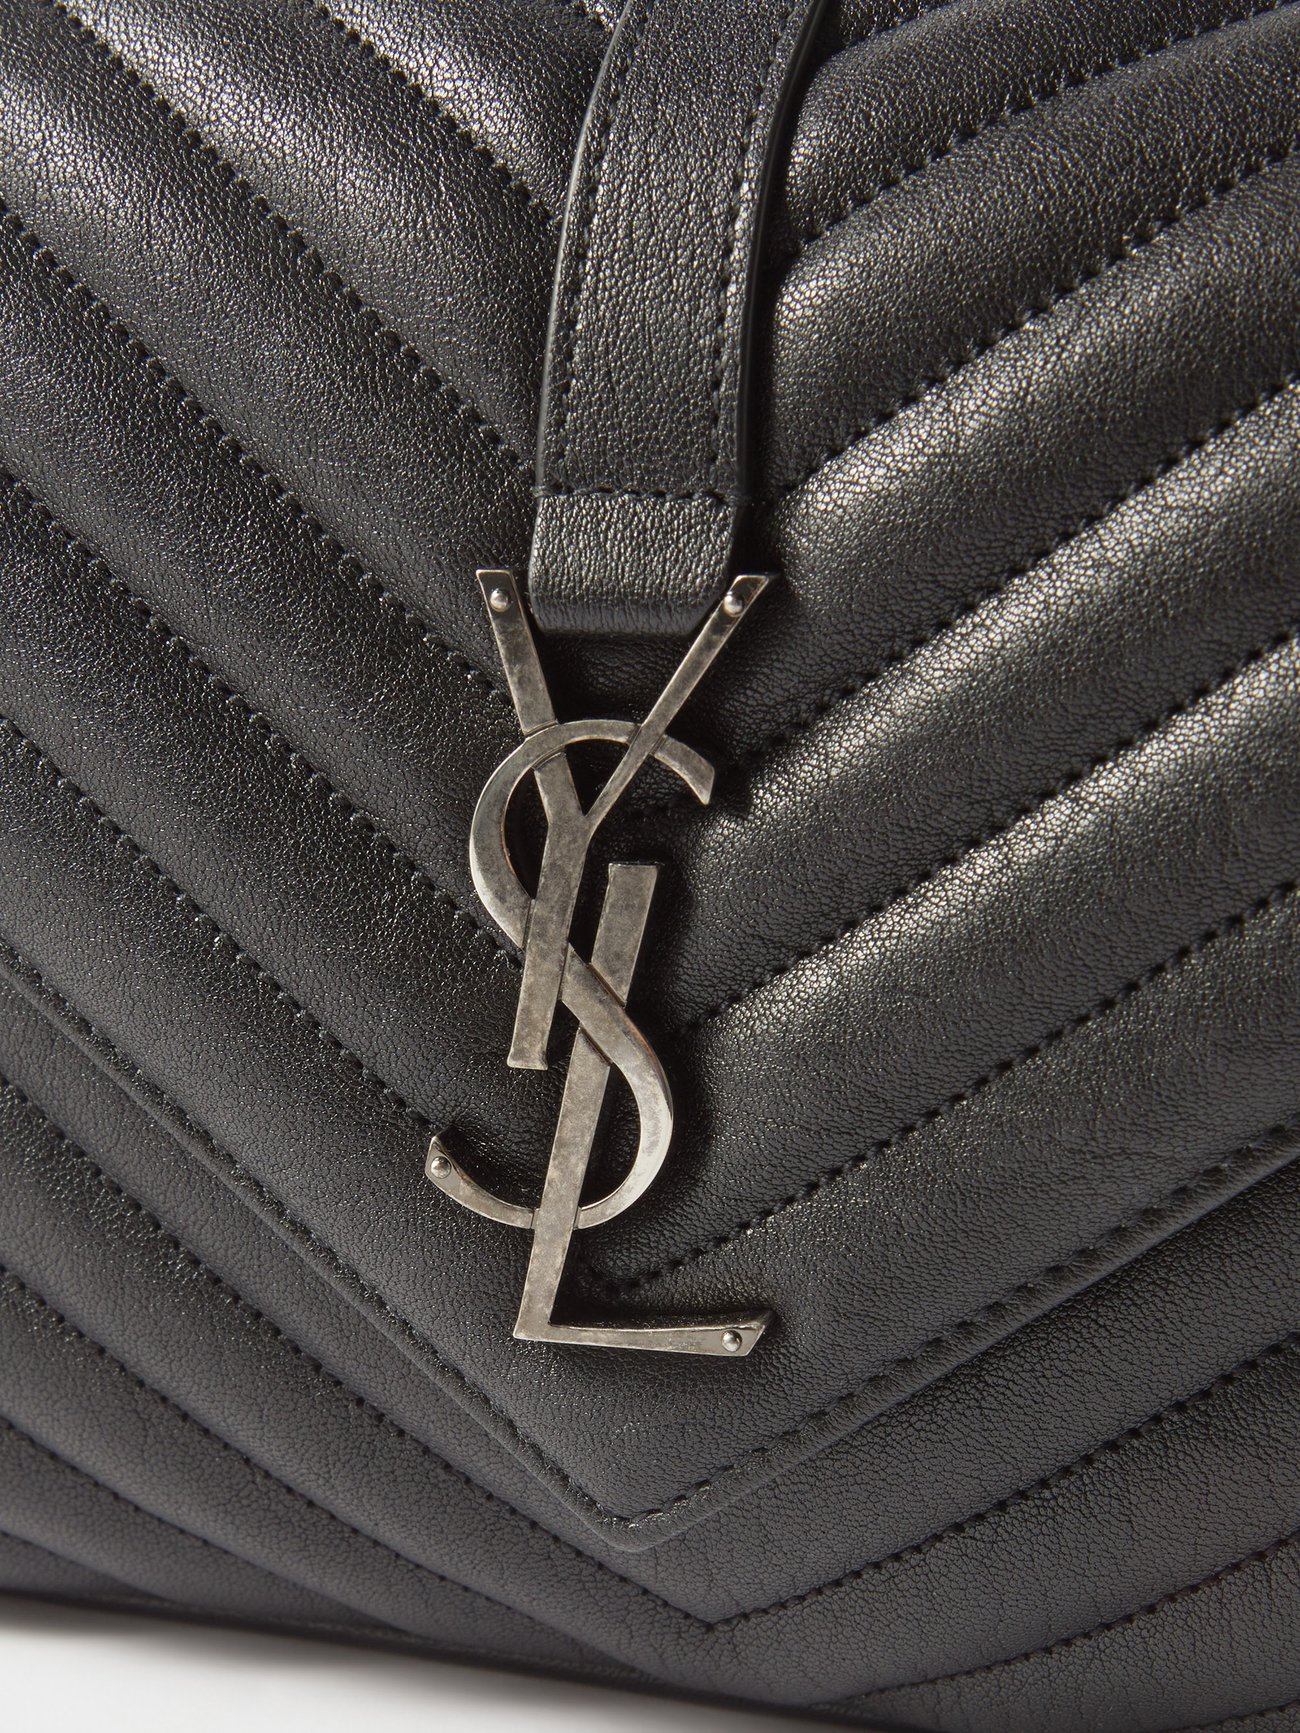 Ysl Saint Laurent college medium chain shoulder bag black